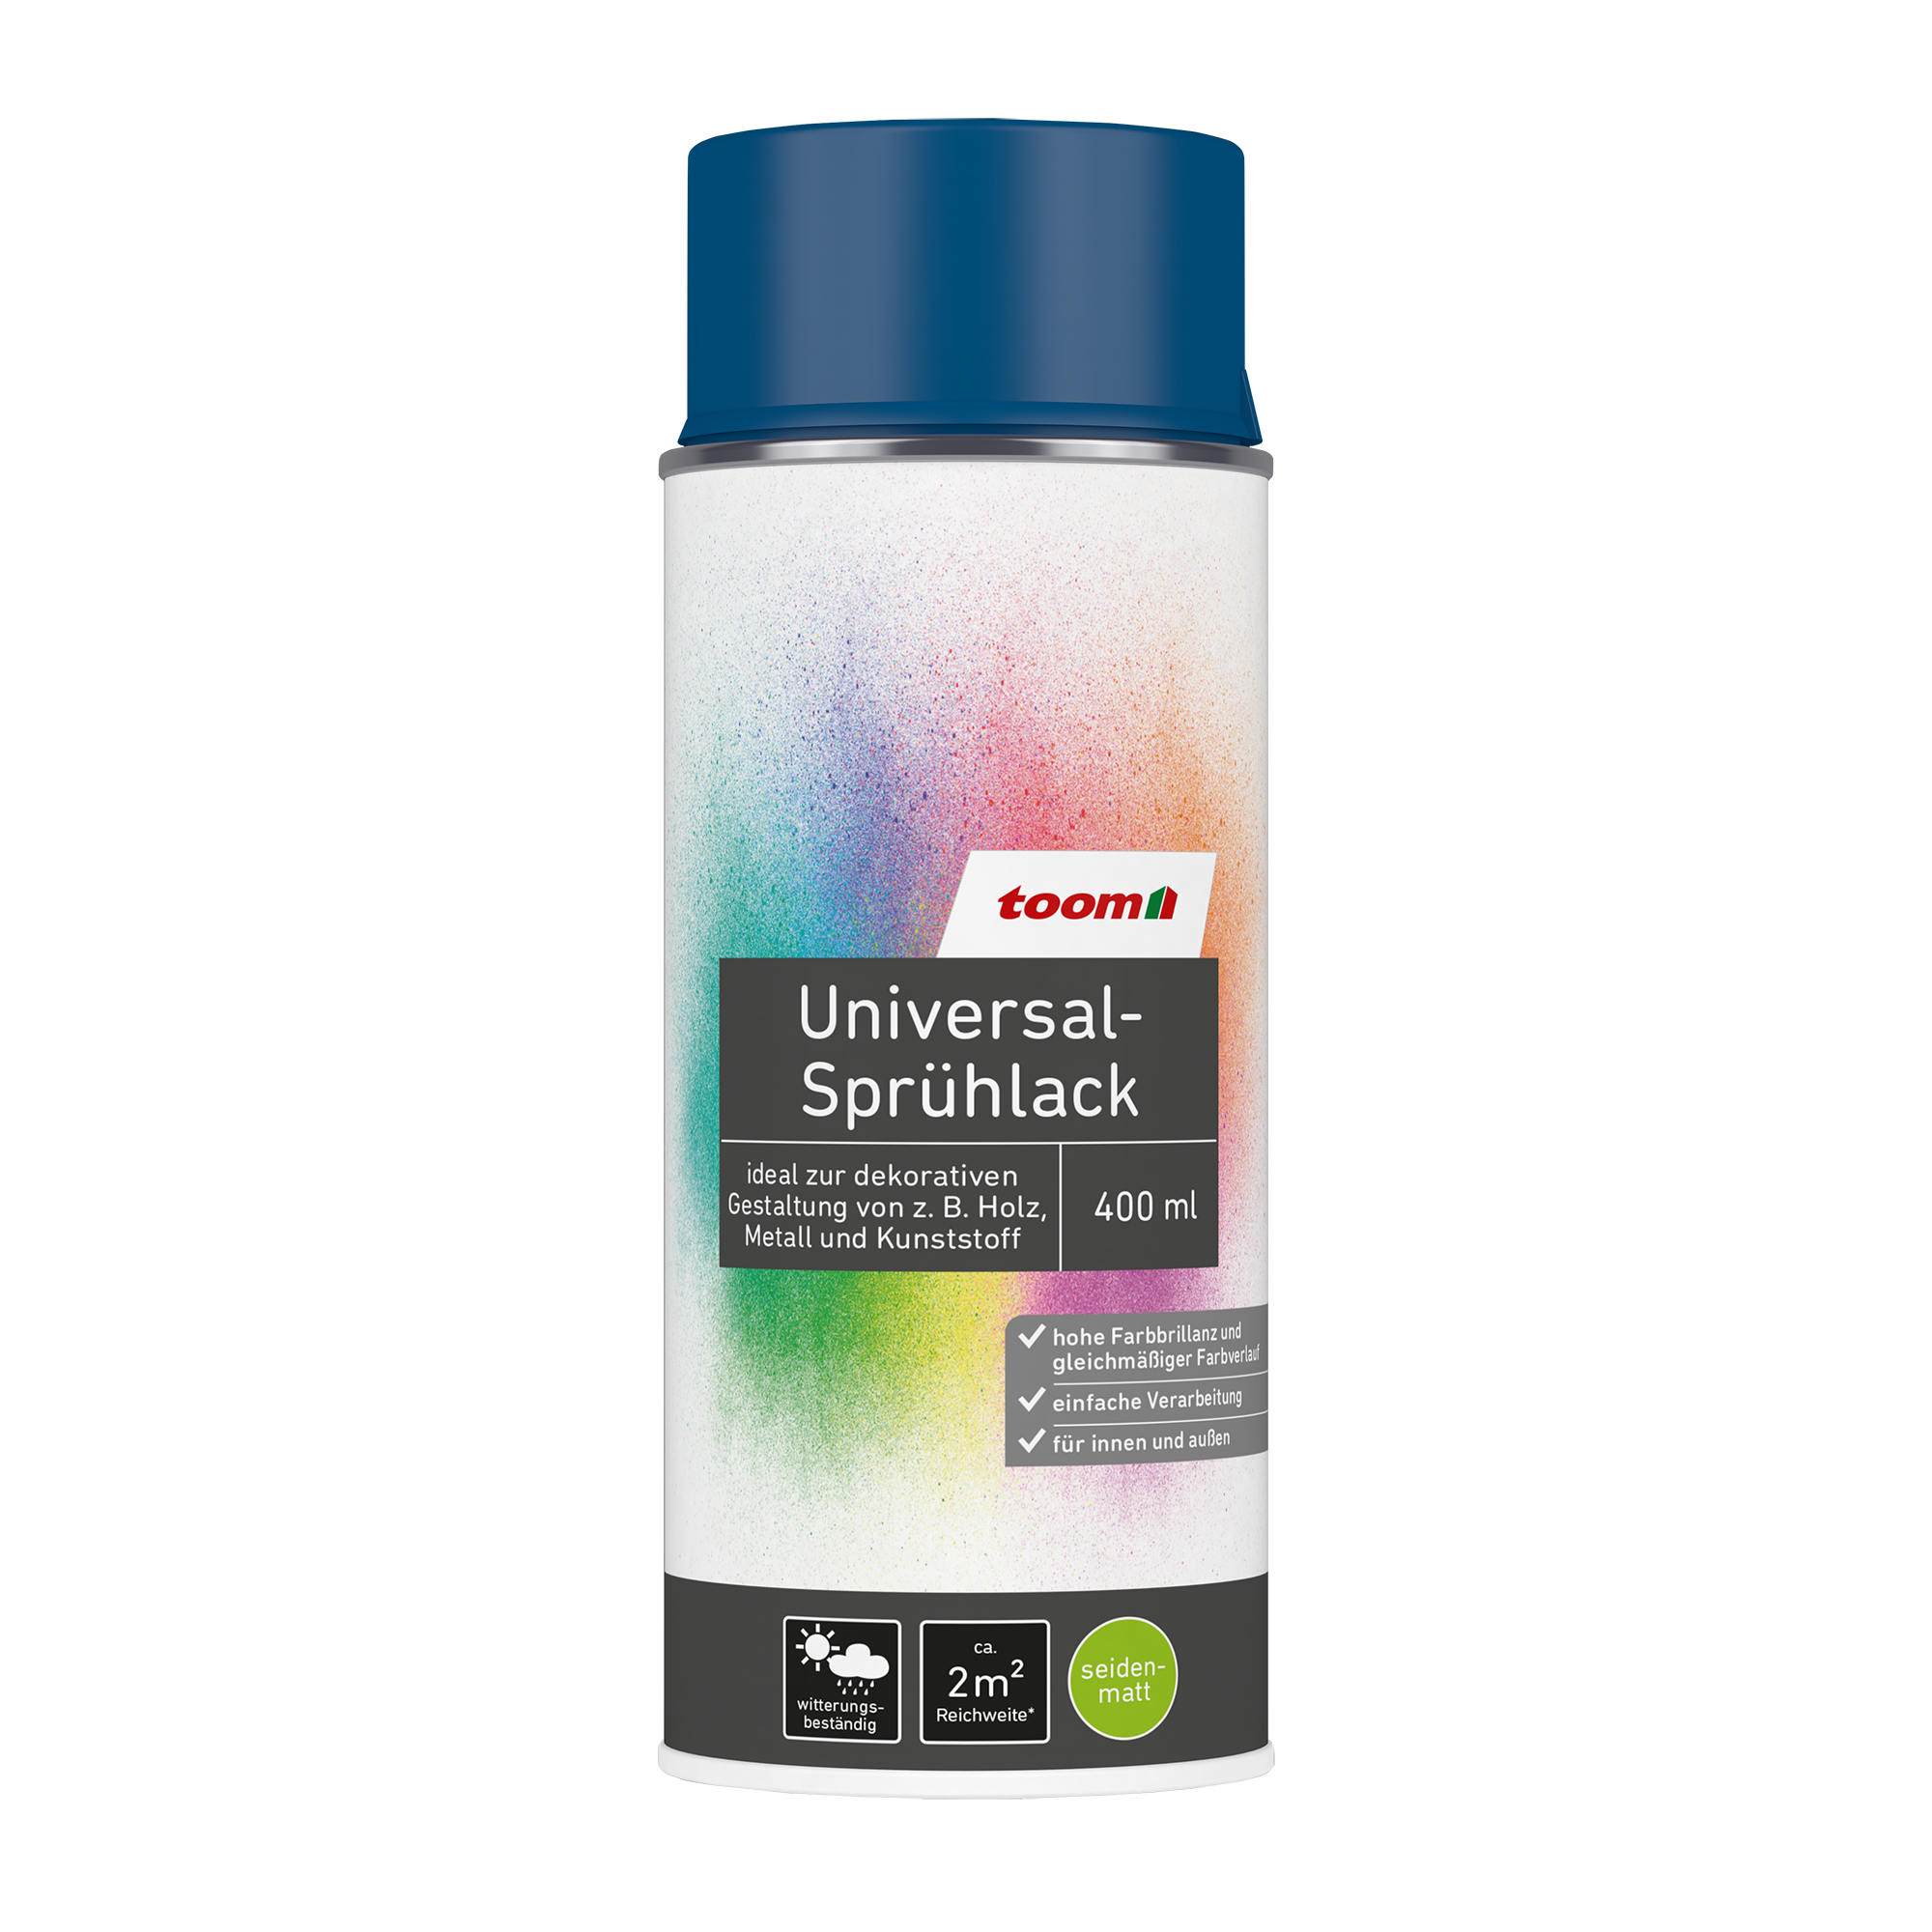 Universal-Sprühlack 'Blaupause' enzianblau seidenmatt 400 ml + product picture